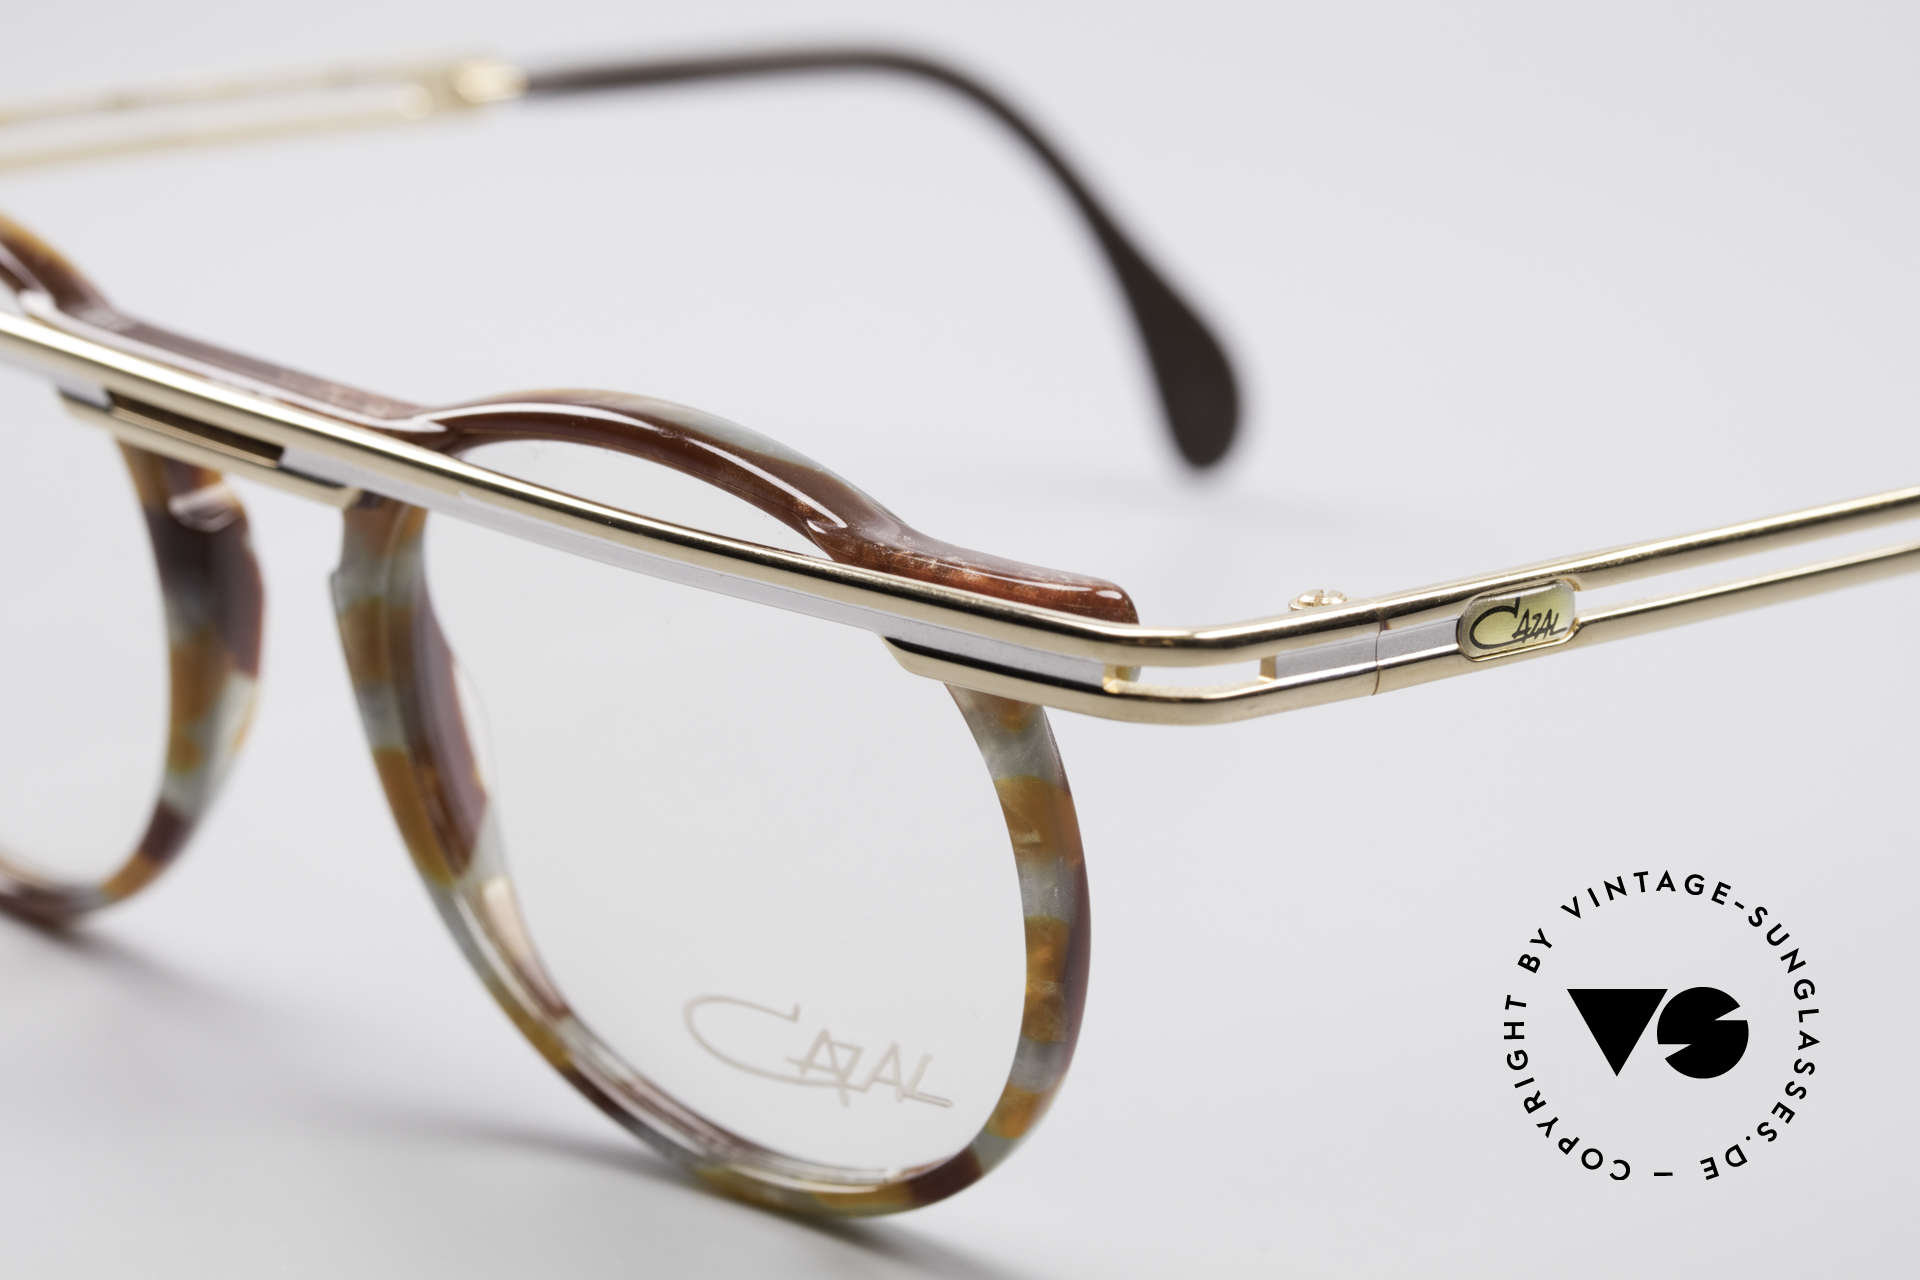 Cazal 648 90's Cari Zalloni Vintage Glasses, a true 90's masterpiece - just precious and distinctive, Made for Men and Women